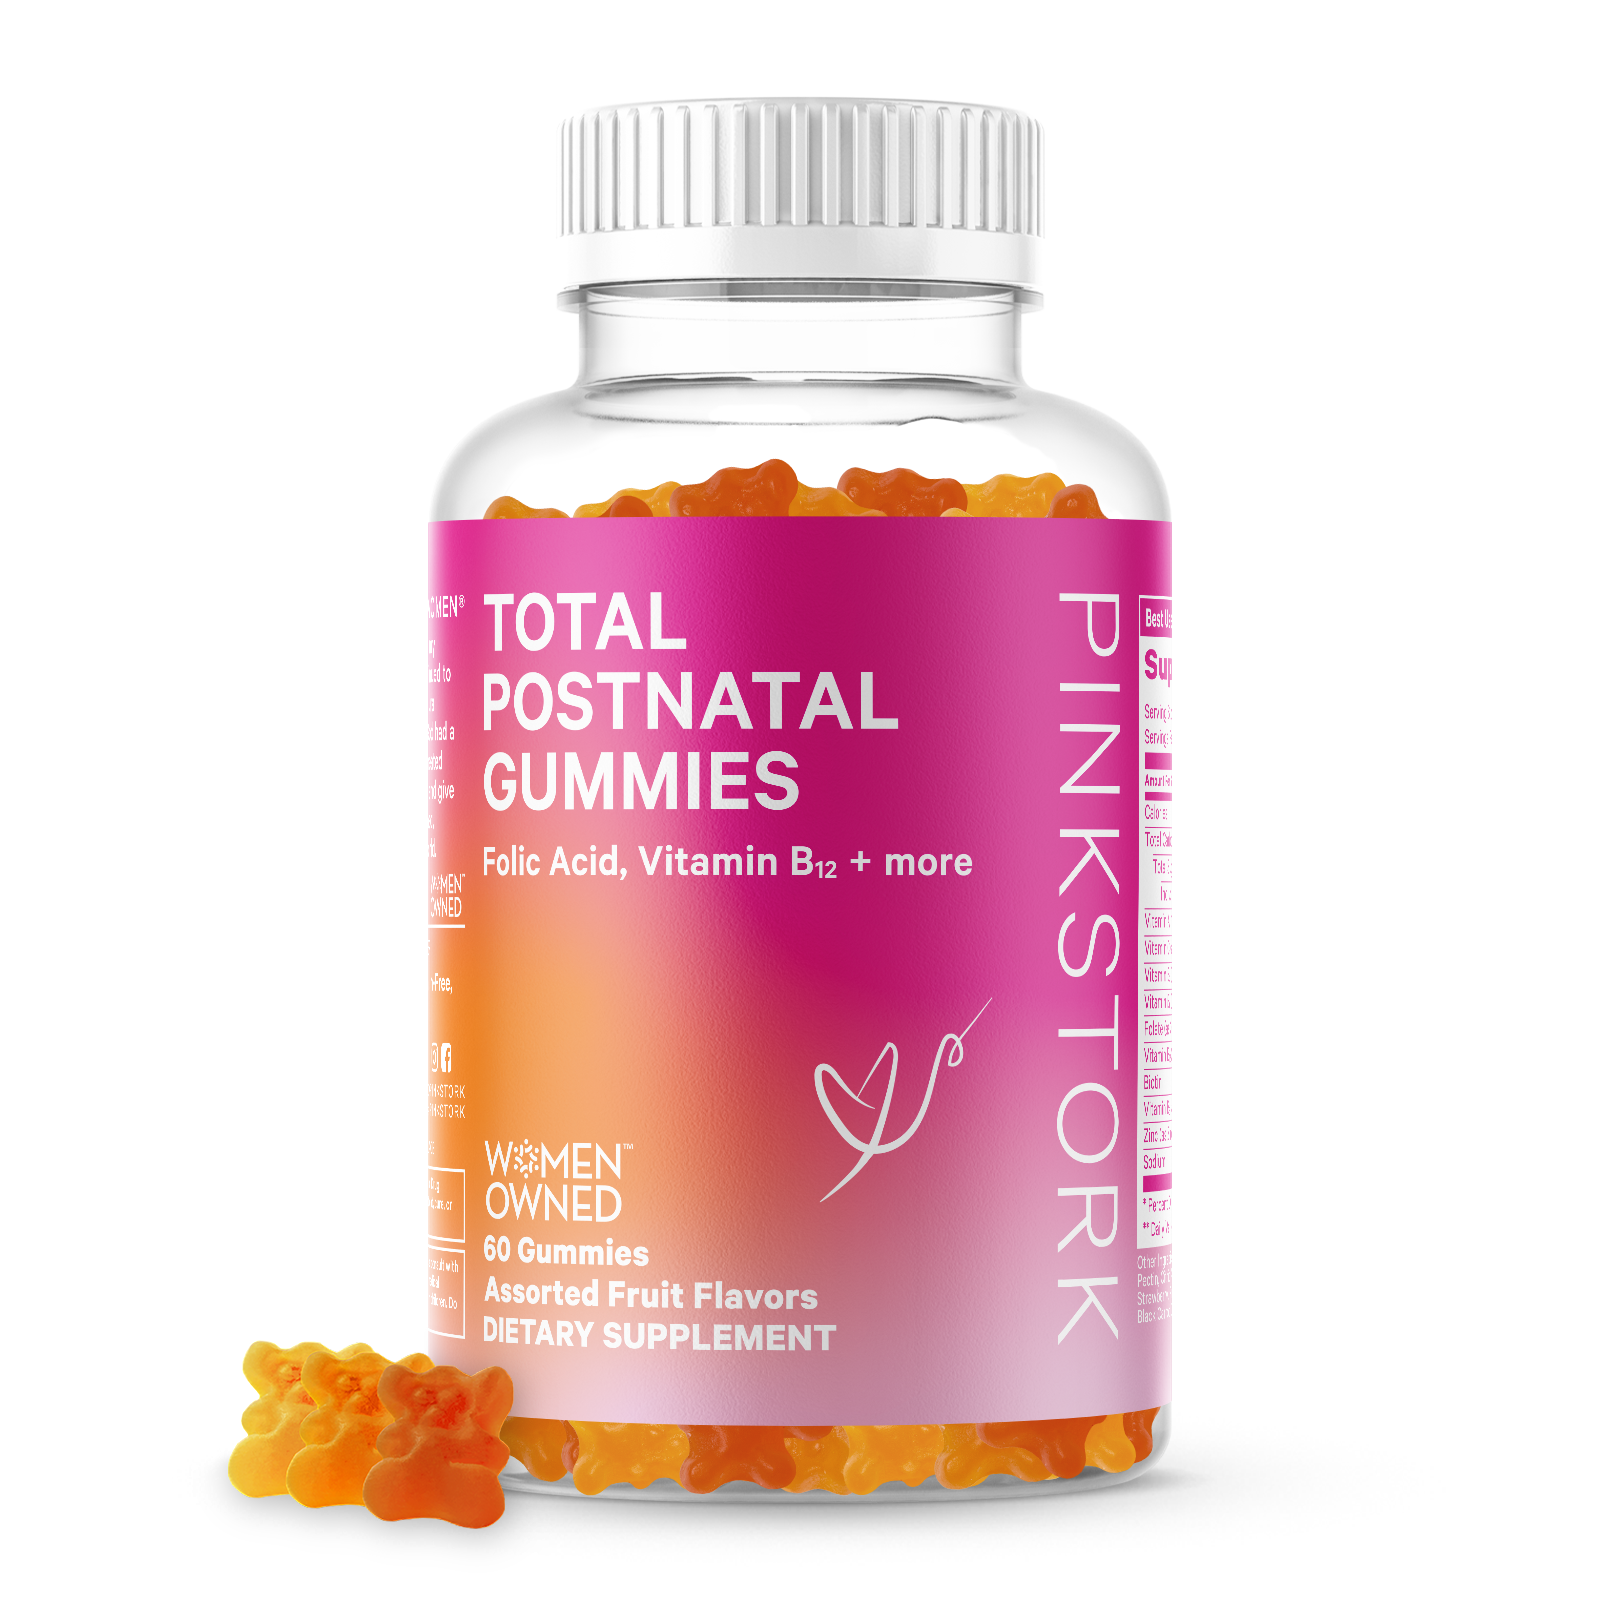 Total Postnatal Gummies